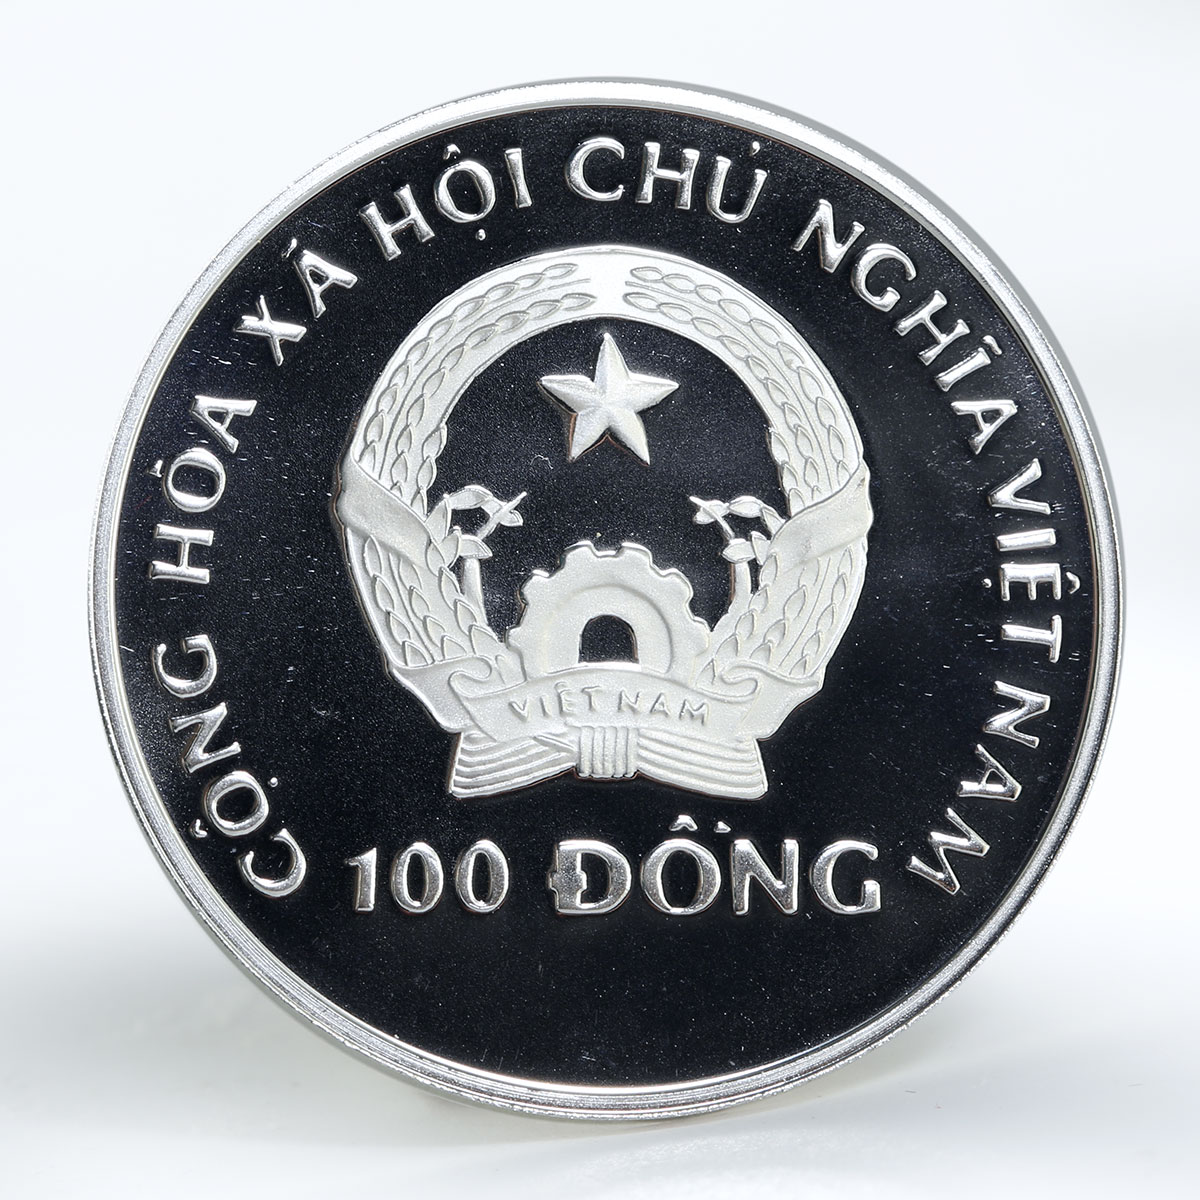 Vietnam 100 dong Boats of the World Savannah ship proof silver coin 1991